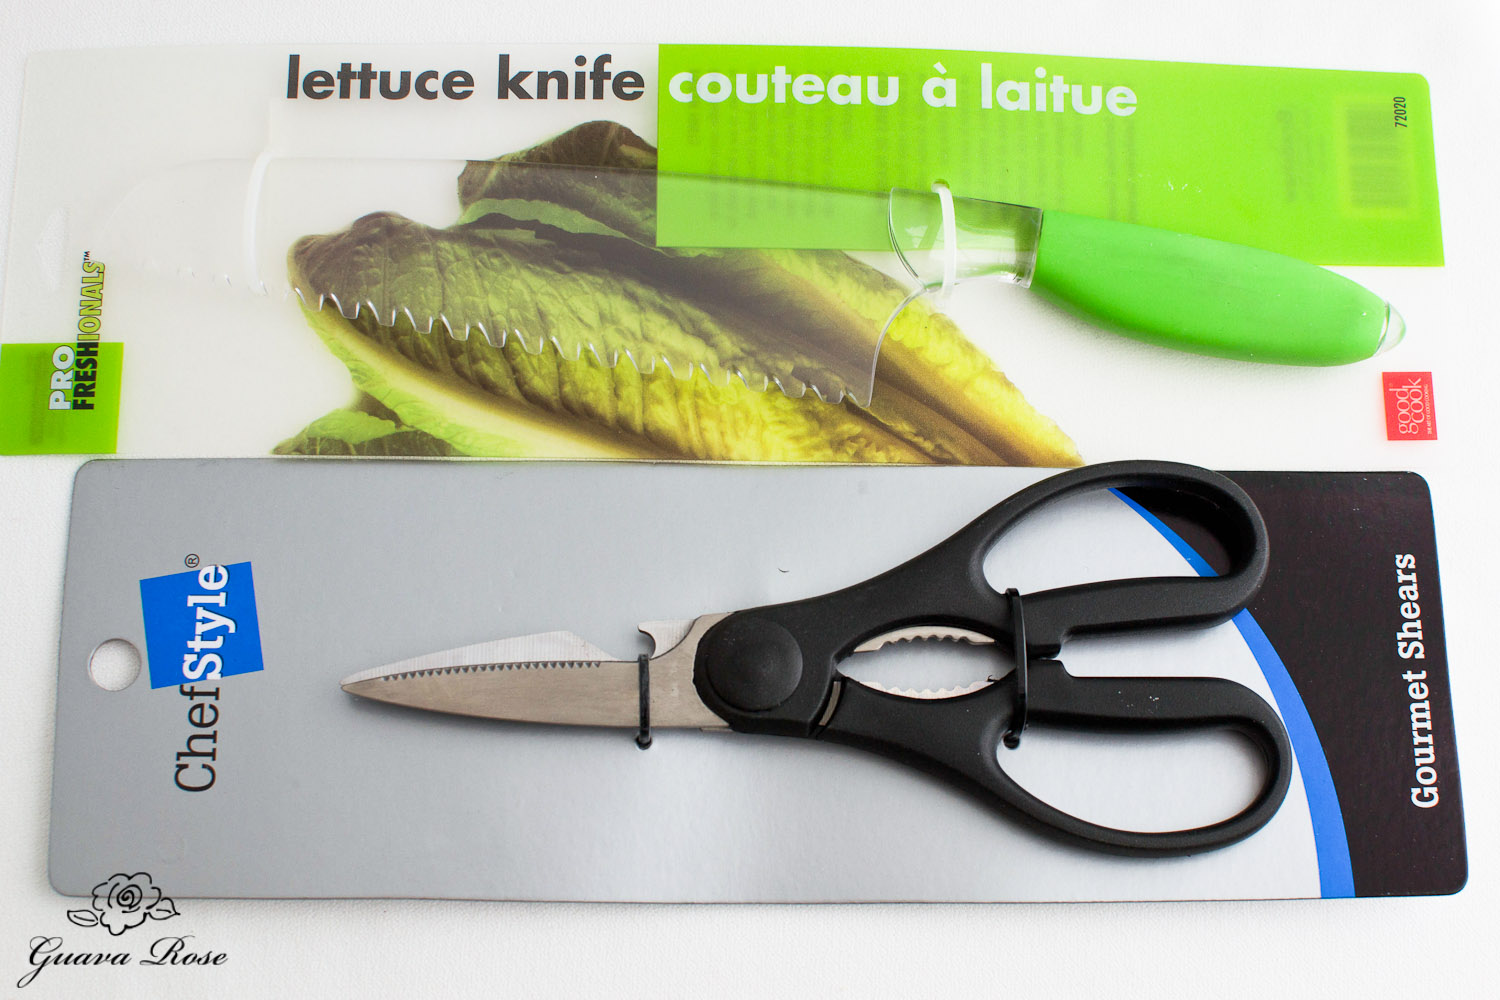 Plastic lettuce knife, Kitchen shears